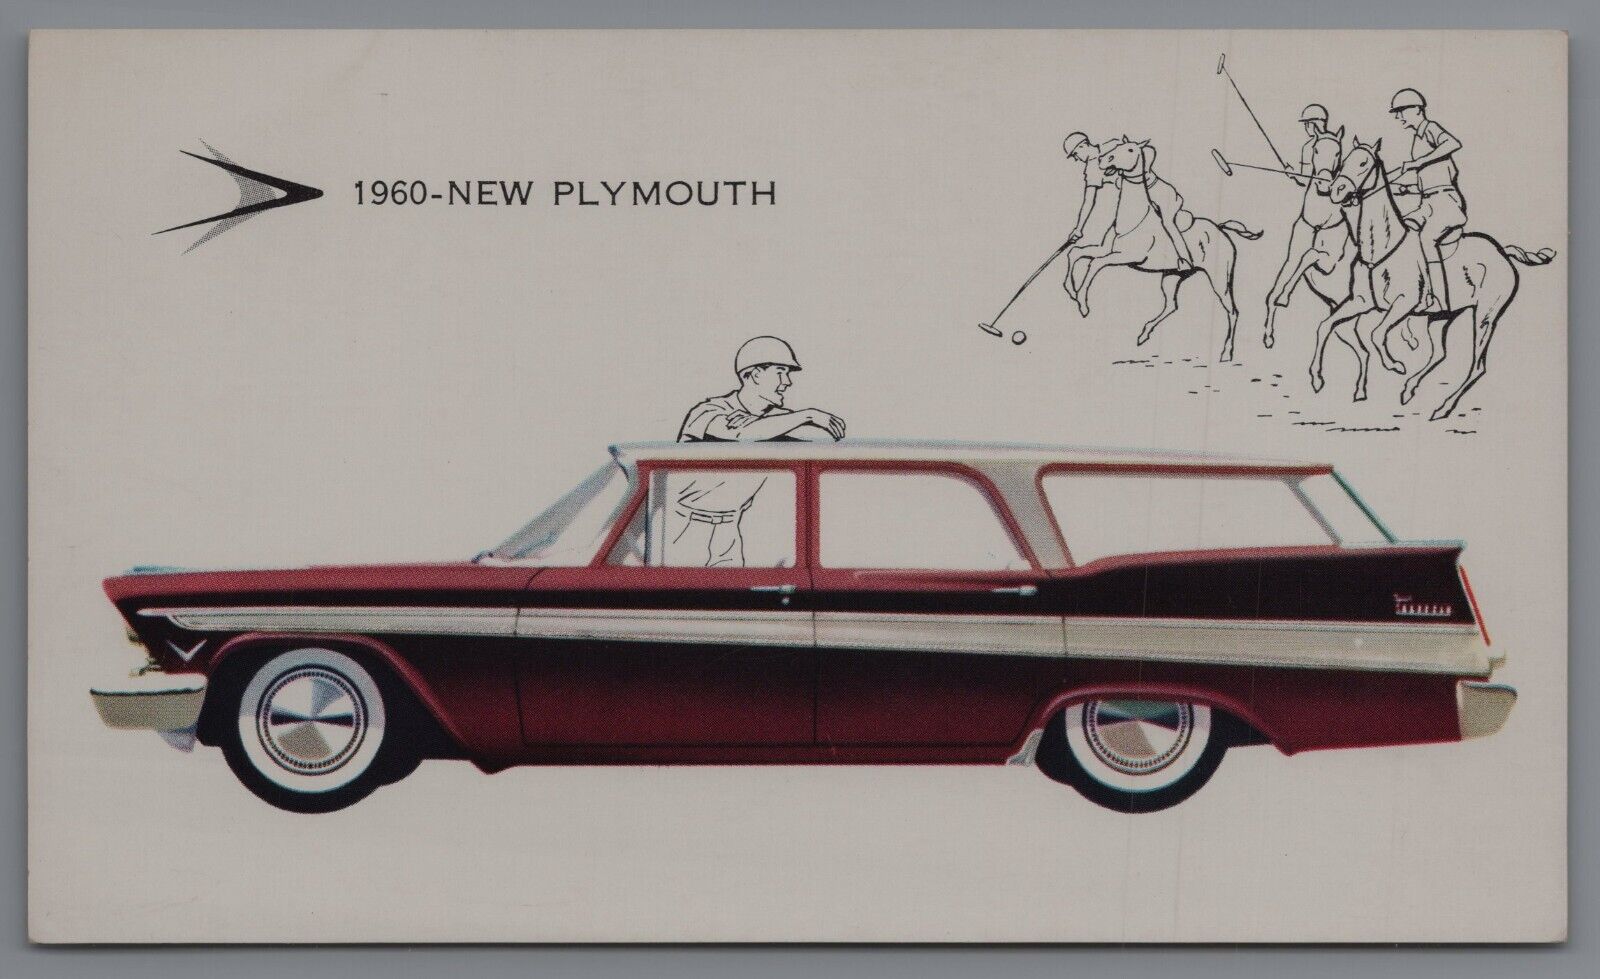 1960 NEW PLYMOUTH The SPORT SUBURBAN 4-door V-8 postcard A4